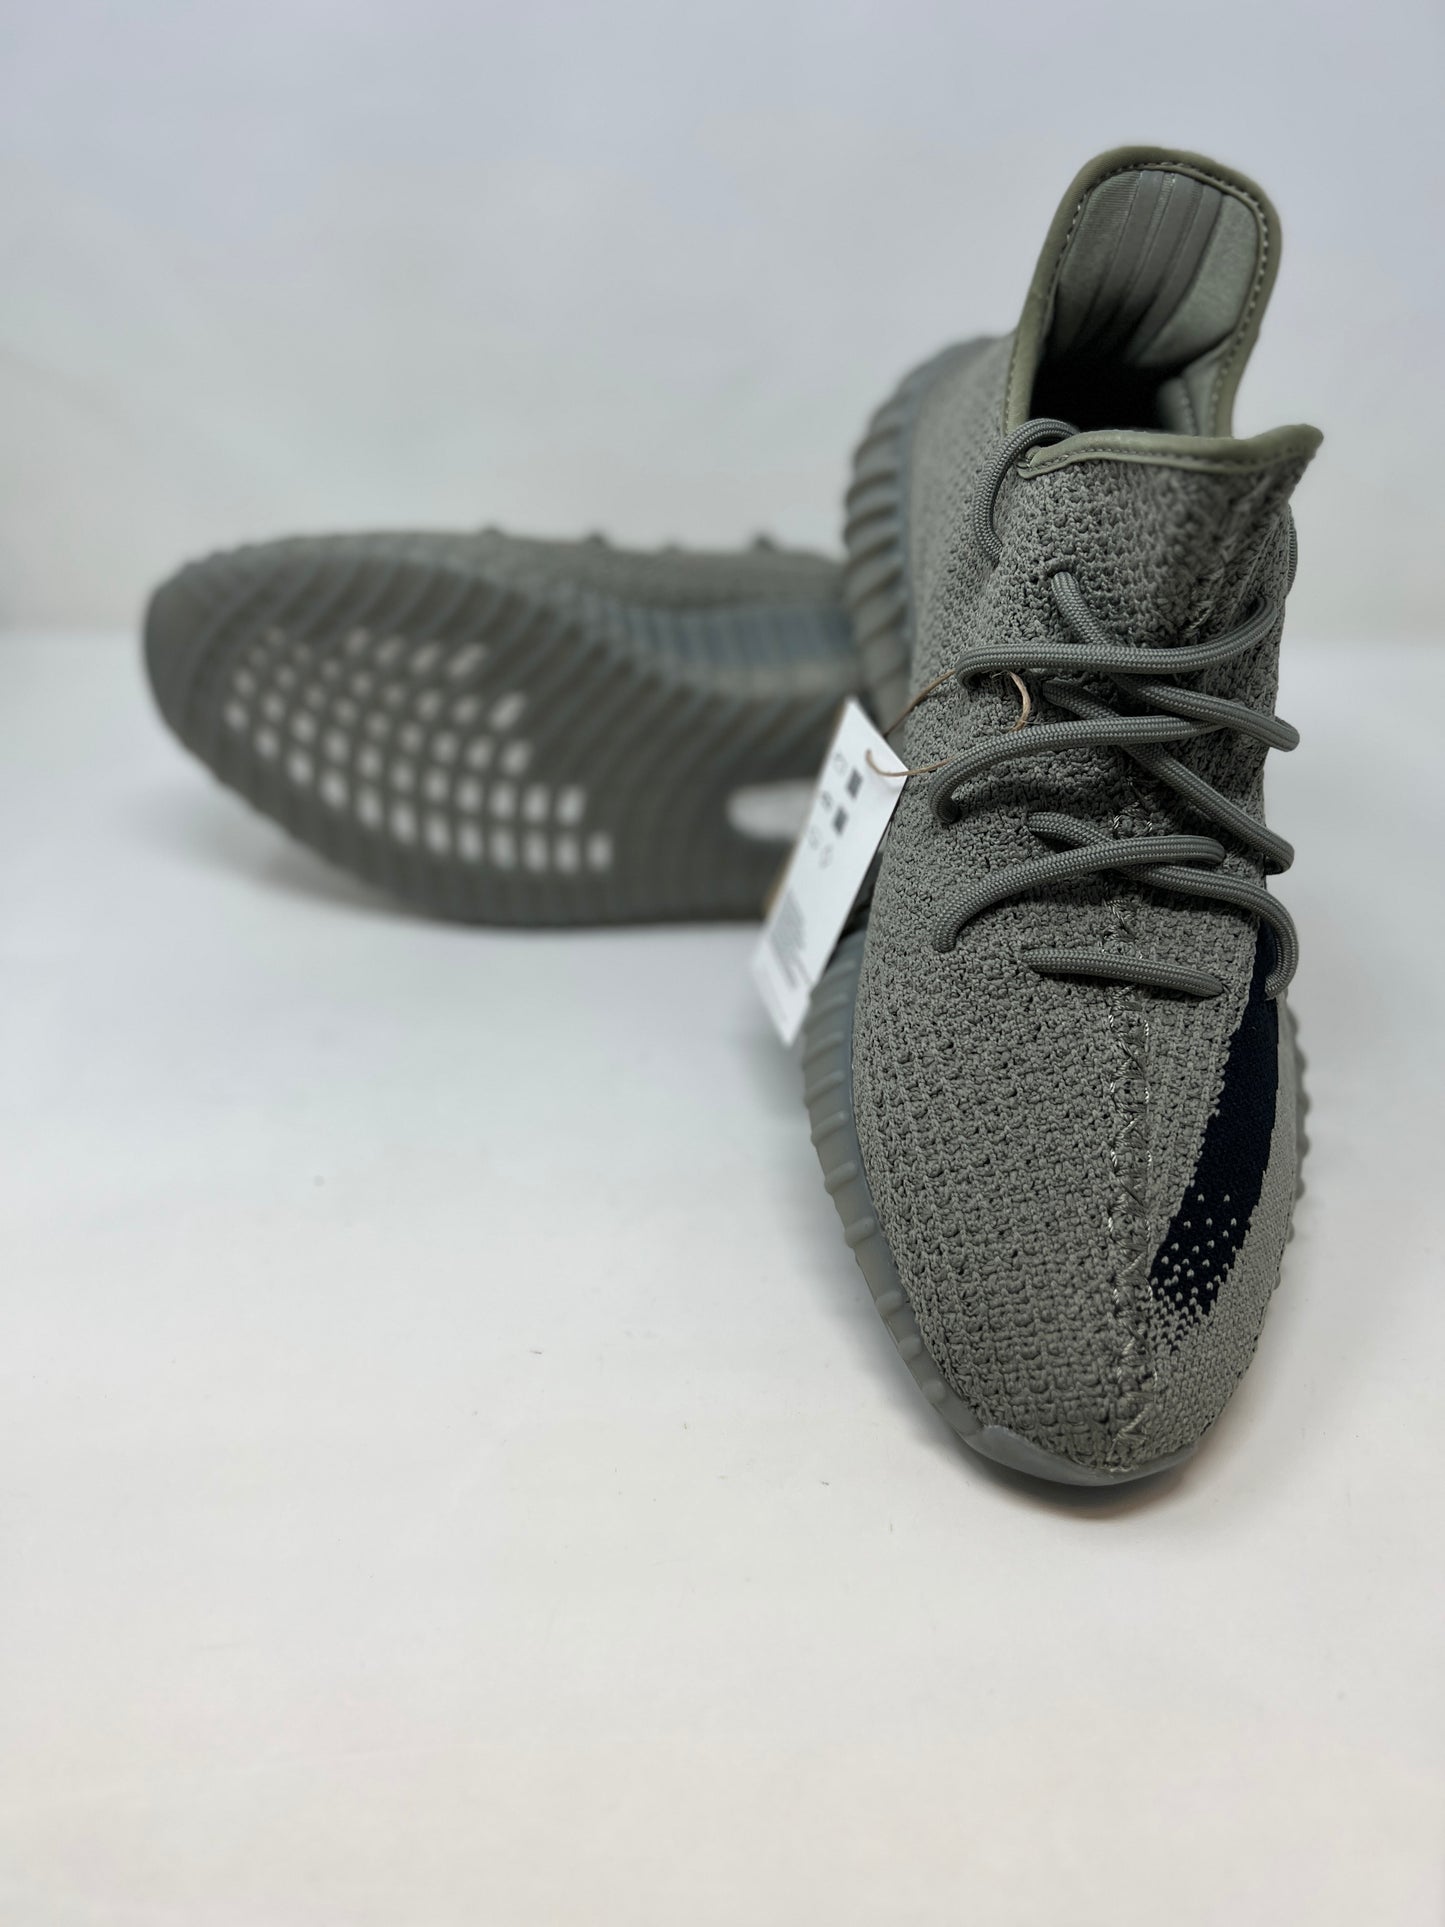 Adidas Yeezy Boost 350 v2 'Granite'